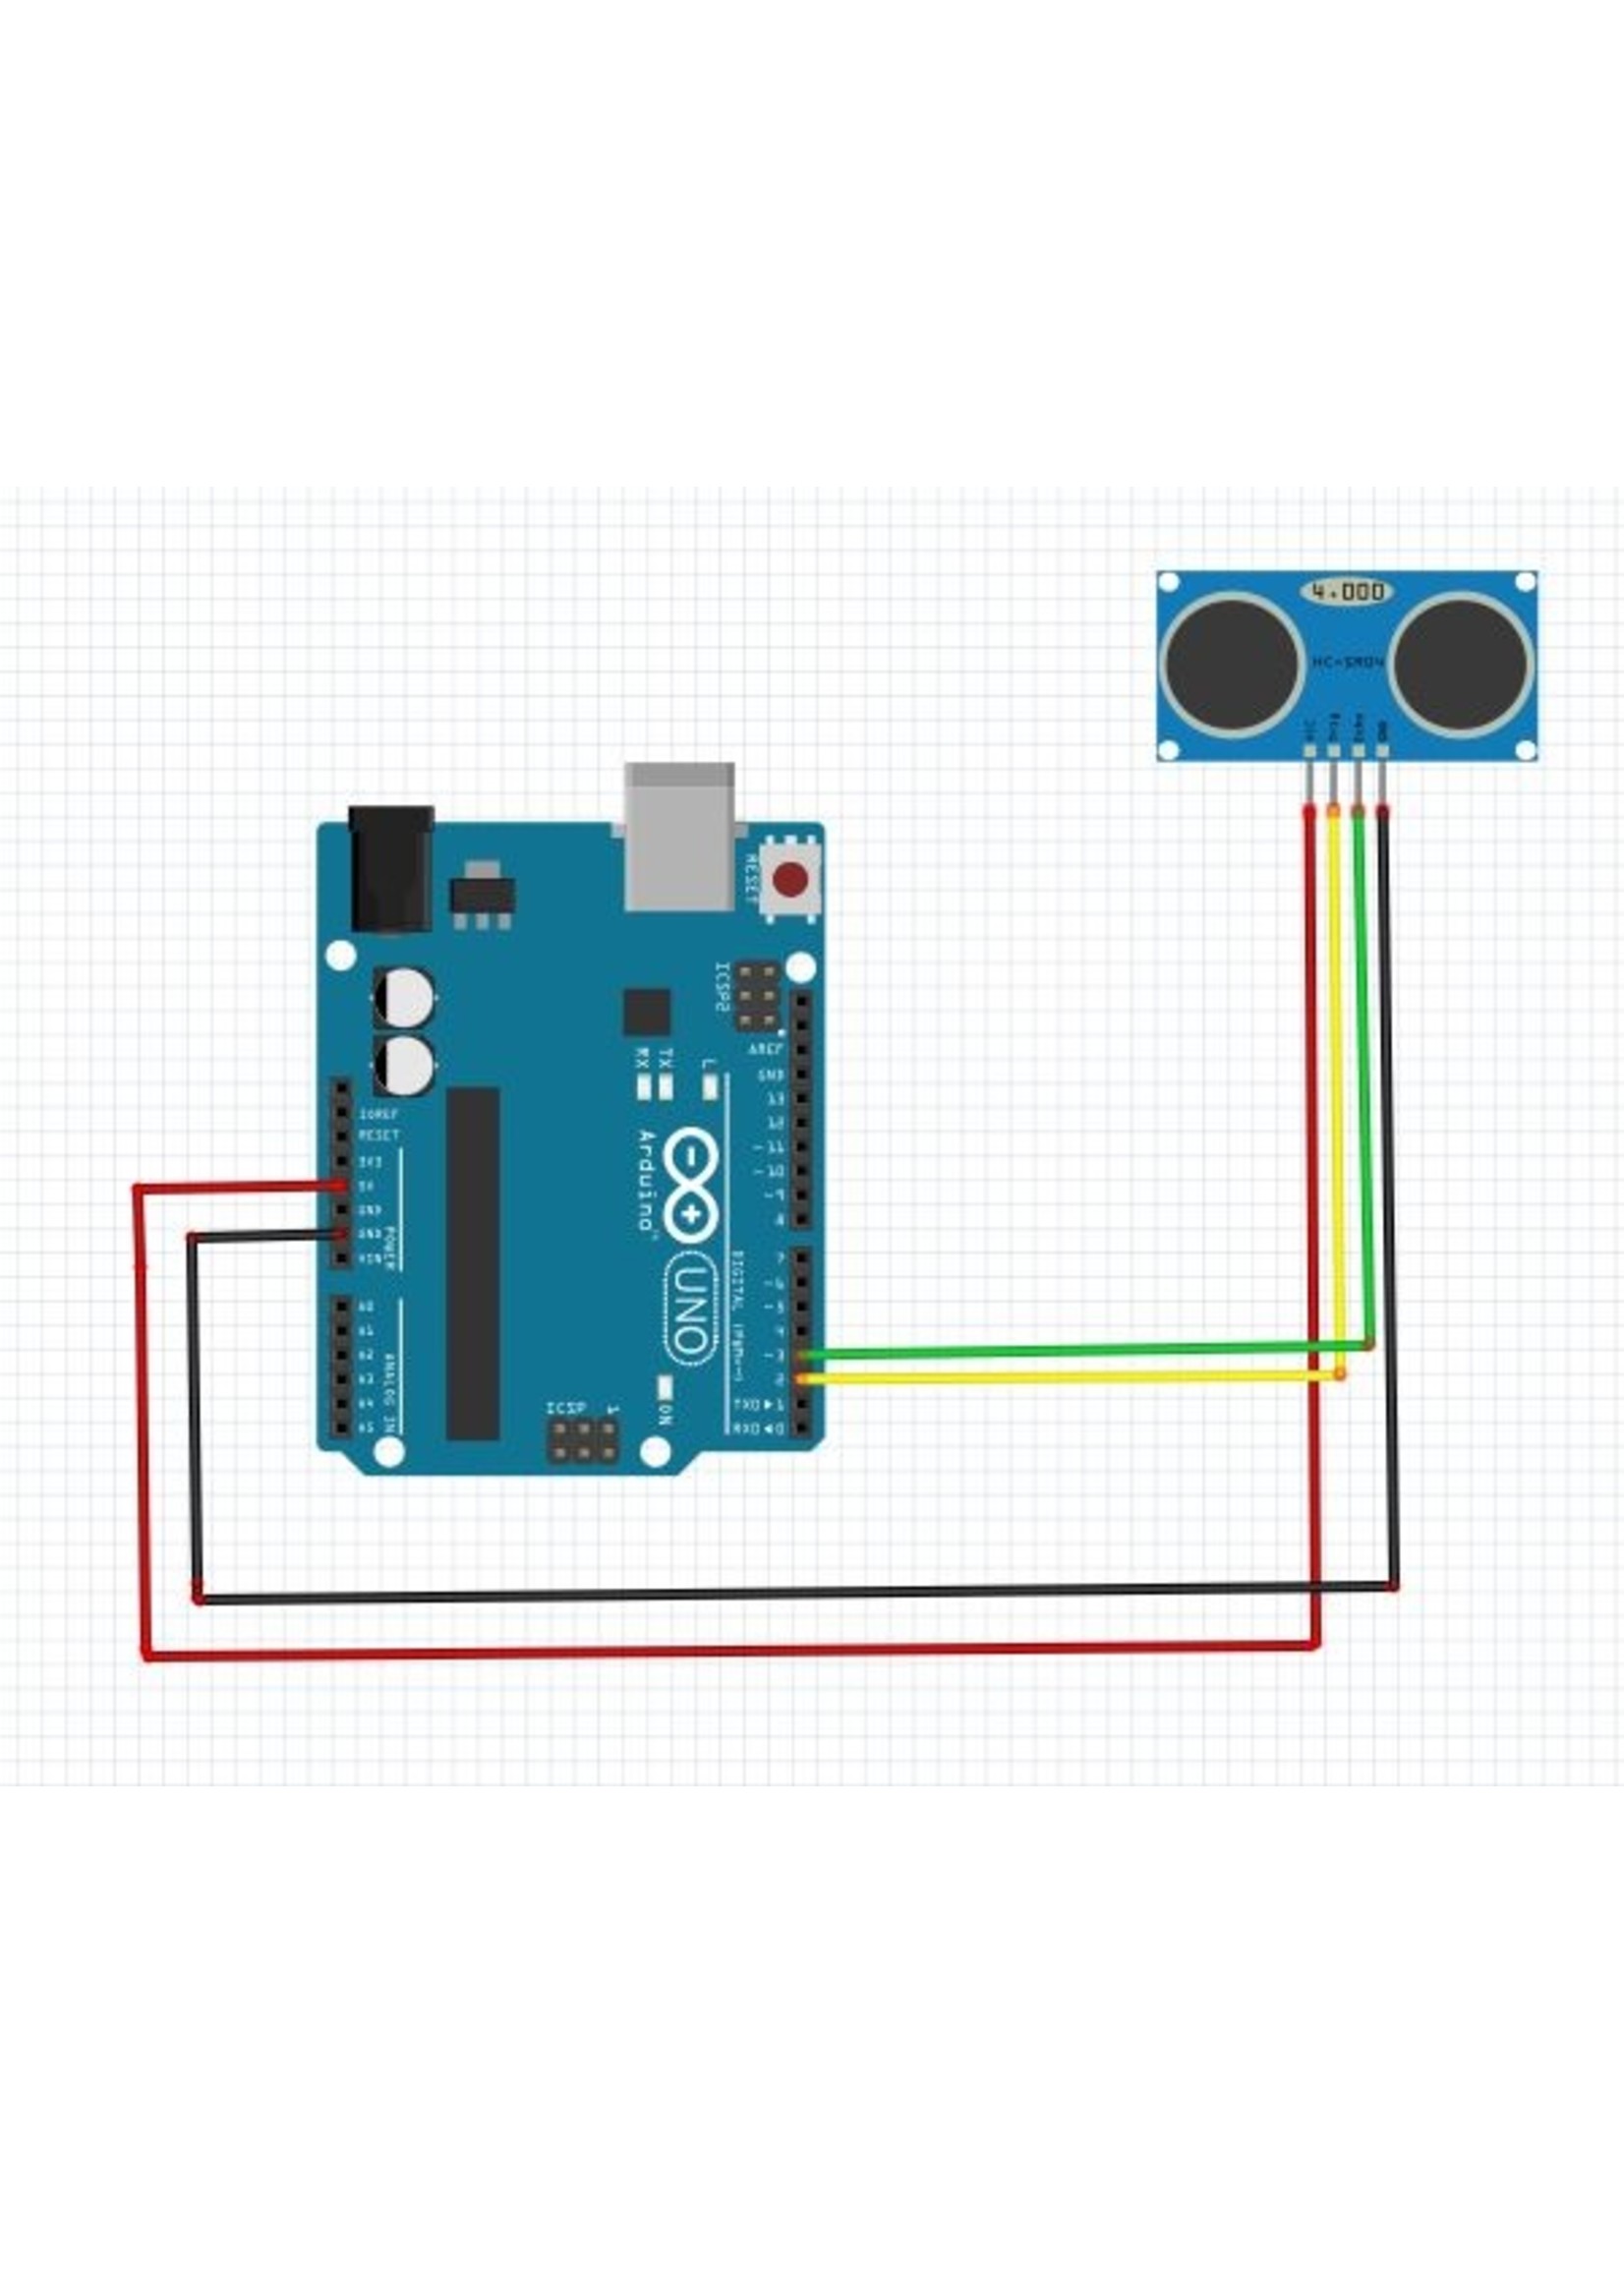 Ultrasonic Ping Sensor